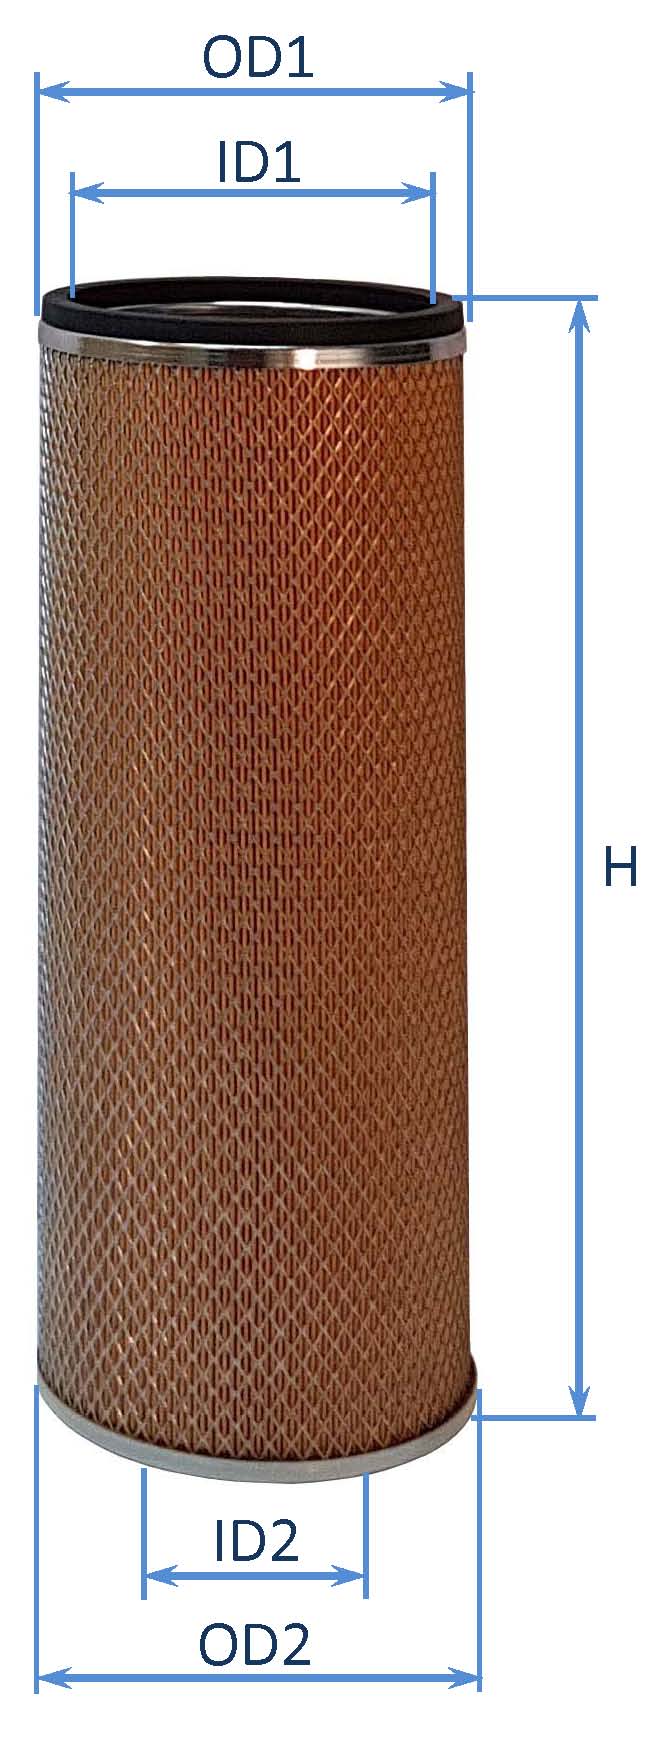 فیلتر هوای كماتسوW90-هپكو530